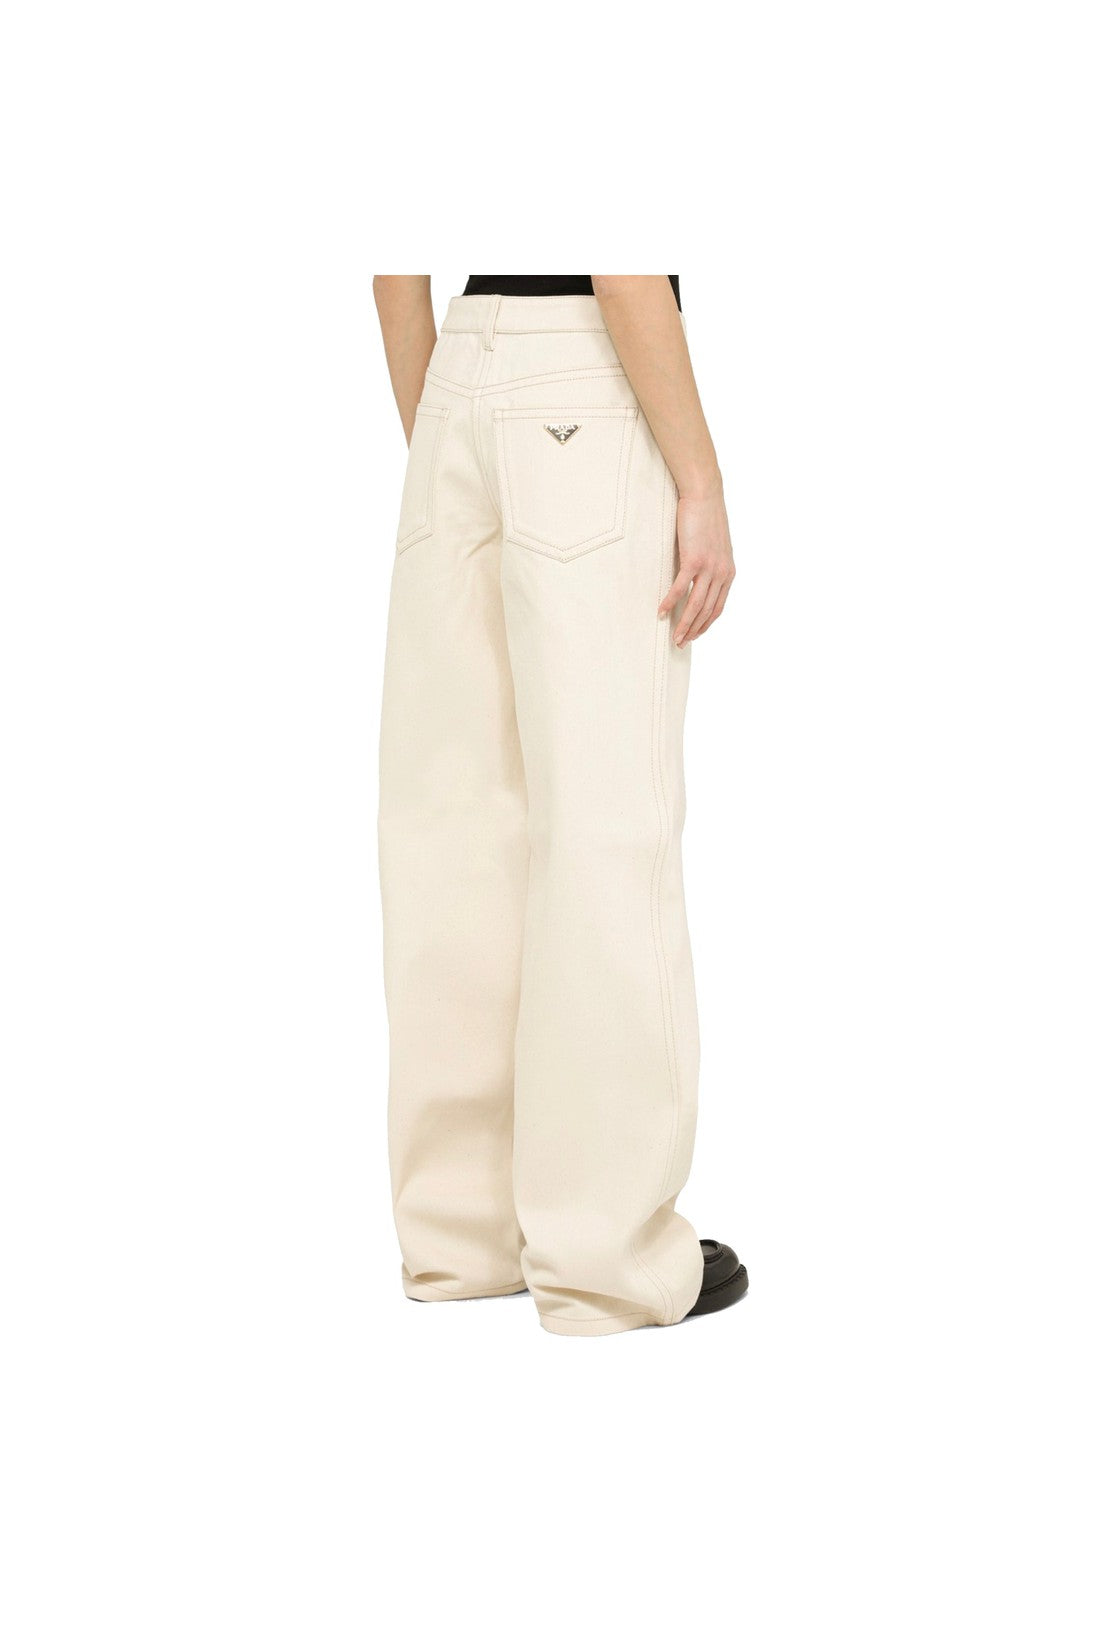 PRADA-Outlet-Sale-Prada Straight Leg Pants-WOMEN CLOTHING-BEIGE-28-ARCHIVIST